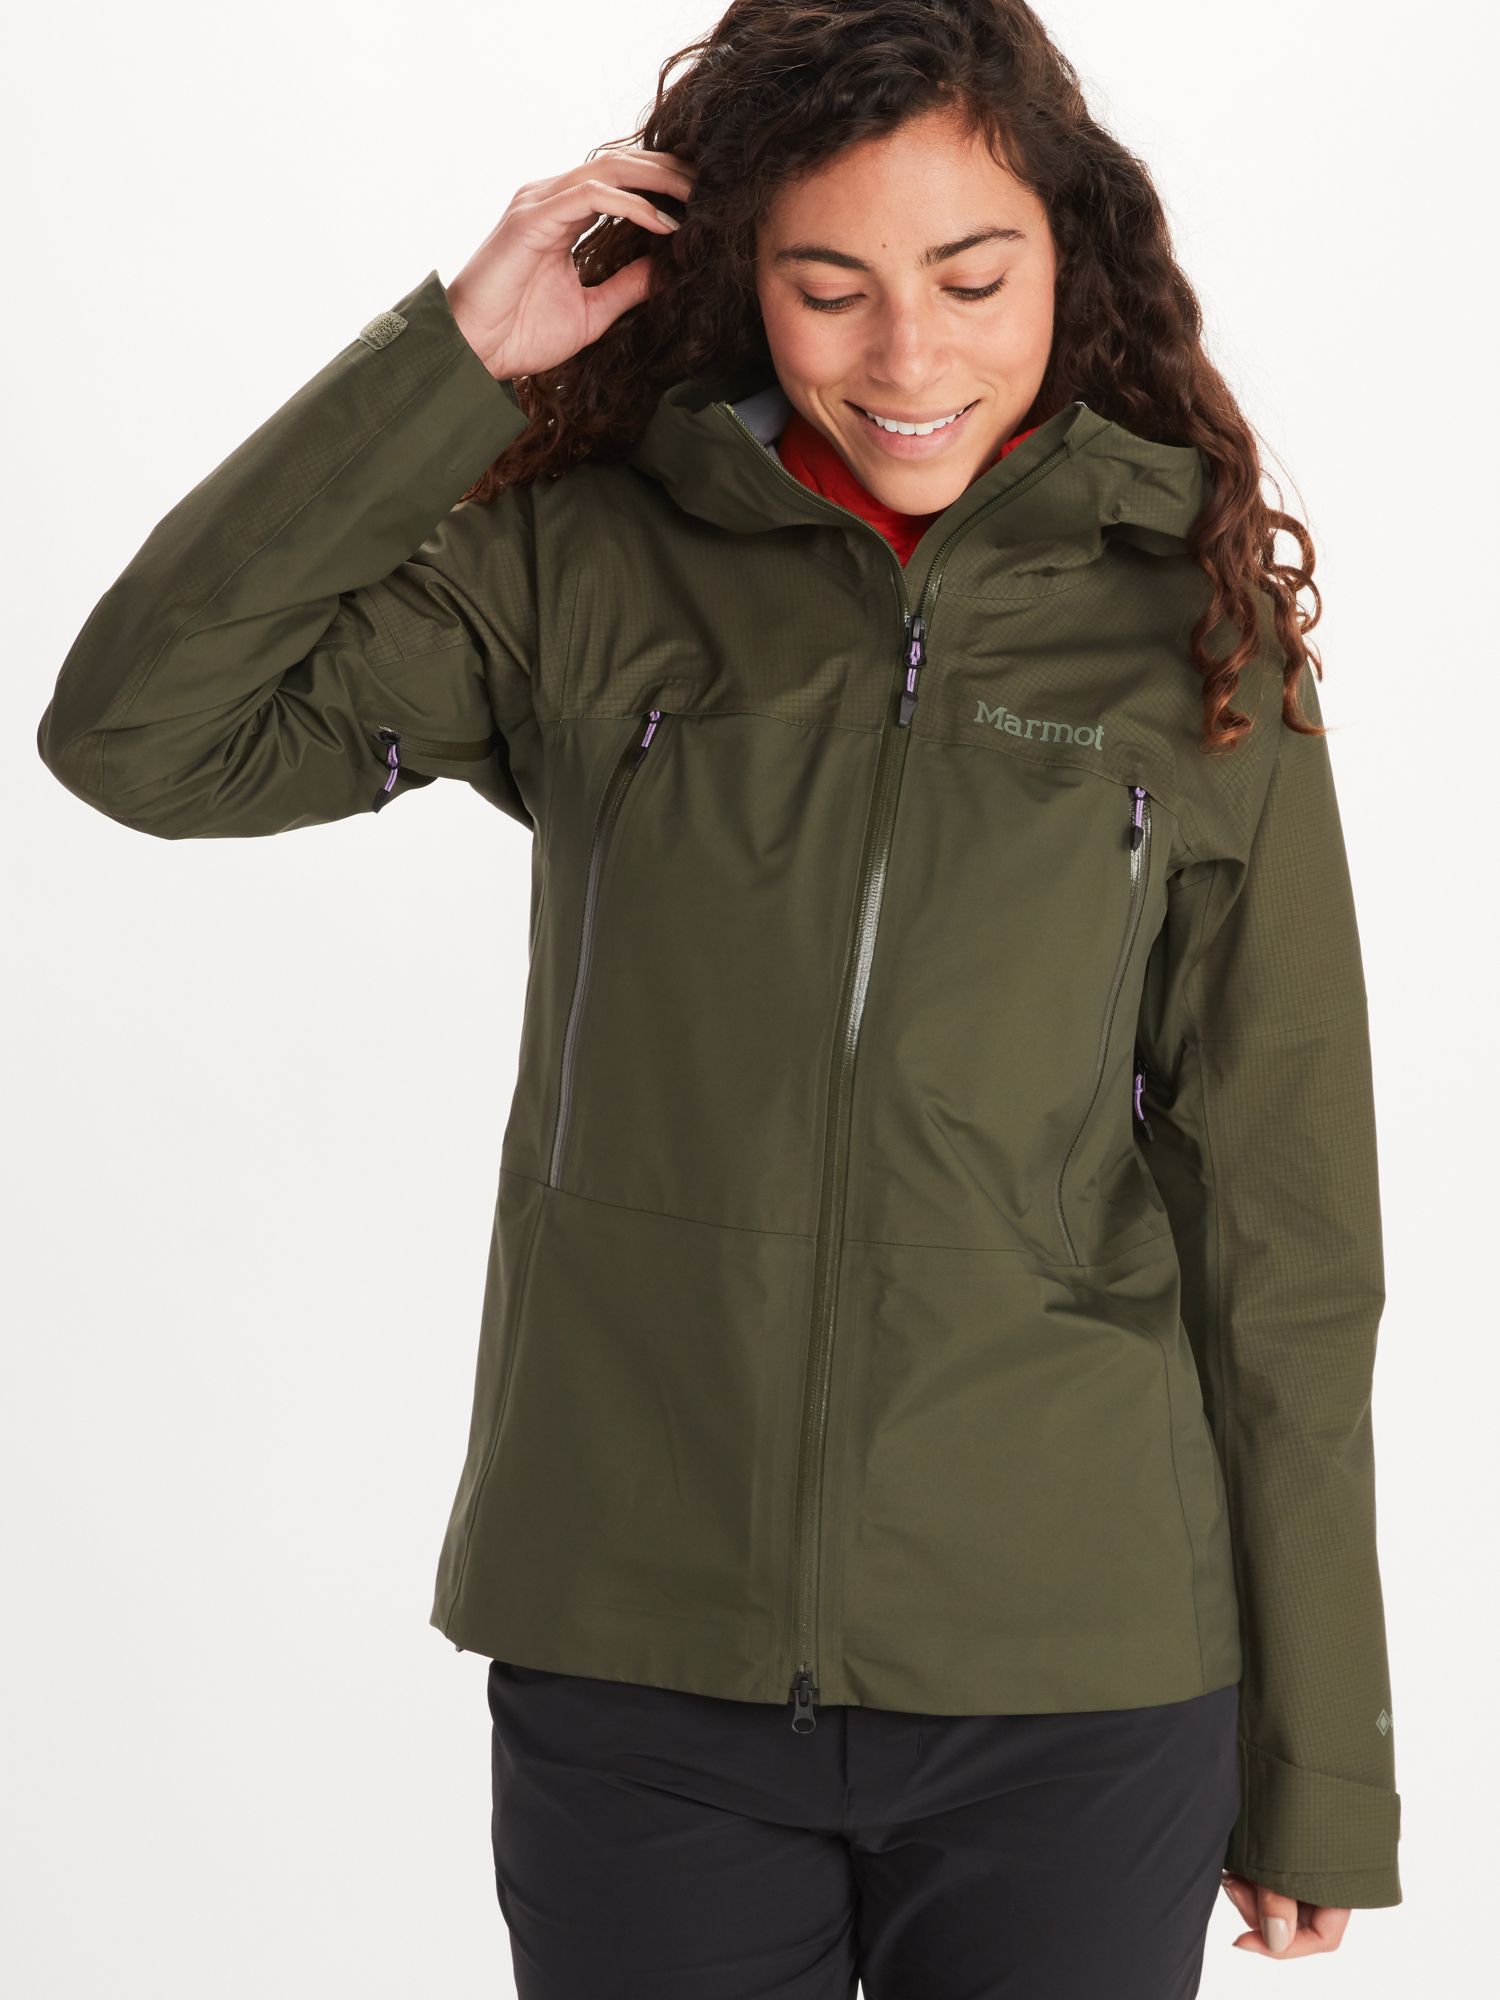 Women's GORE-TEX® Mitre Peak Jacket | Marmot